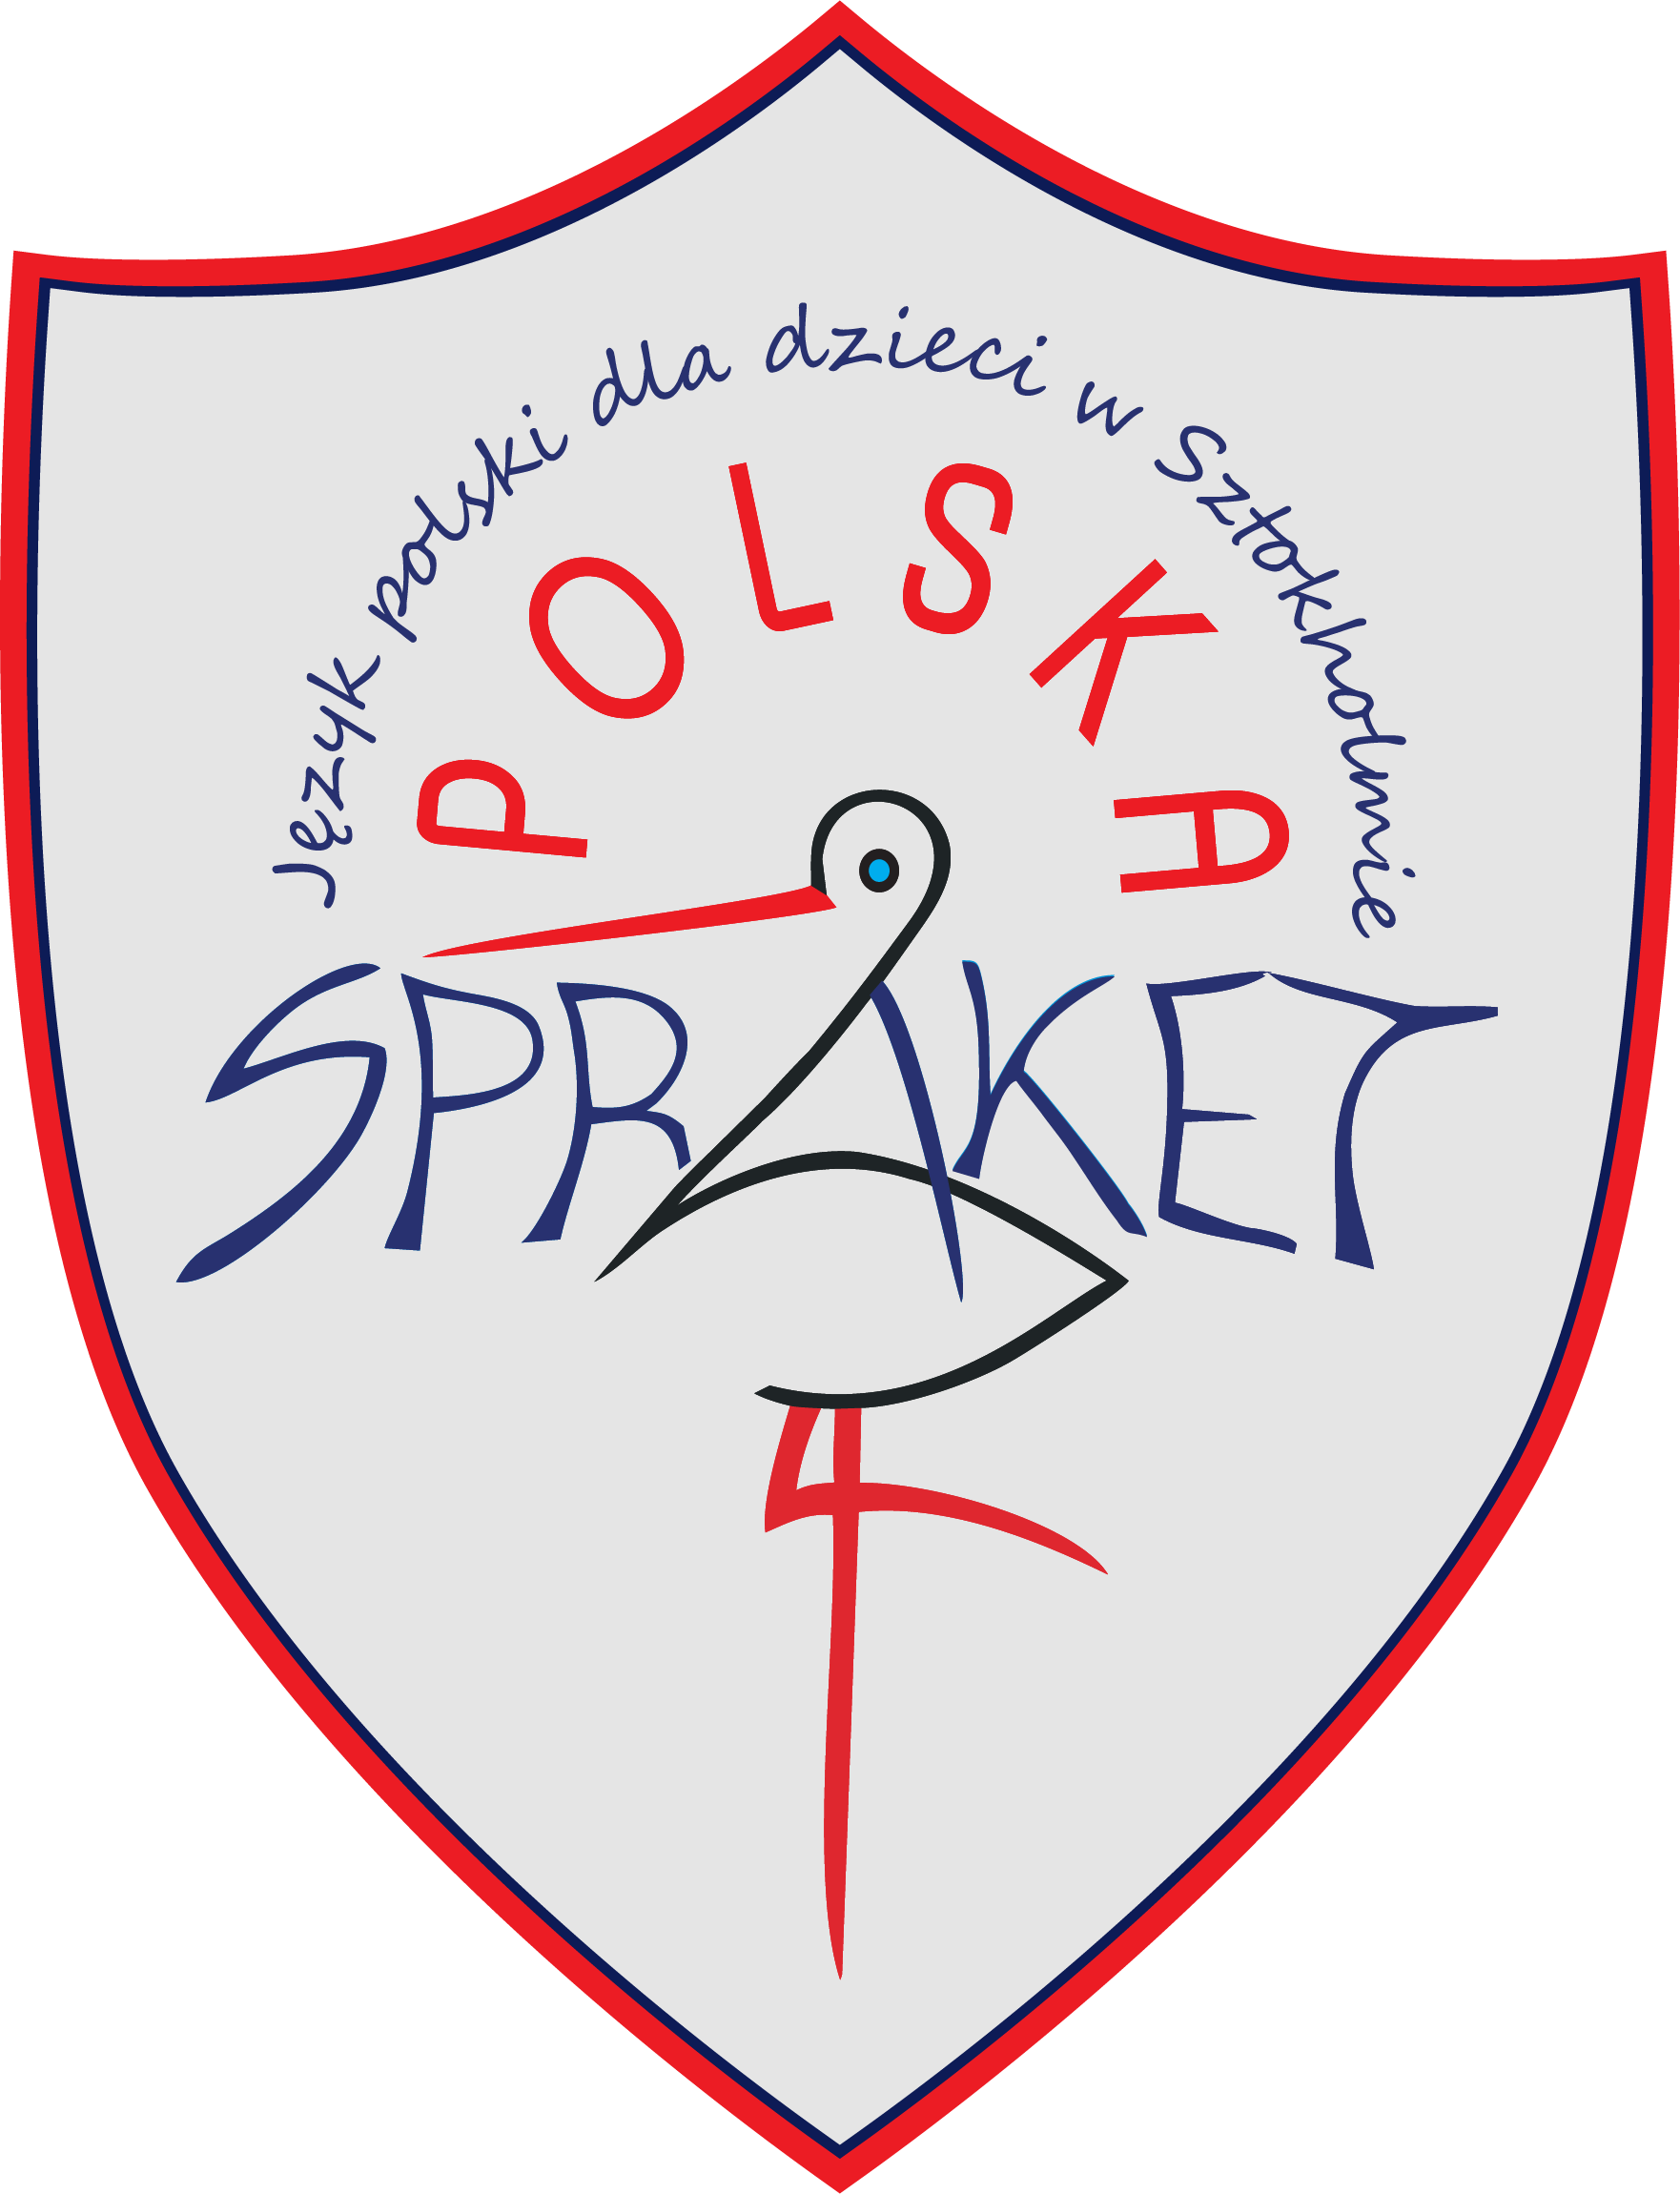 Polska SPråket w Sztokholmie